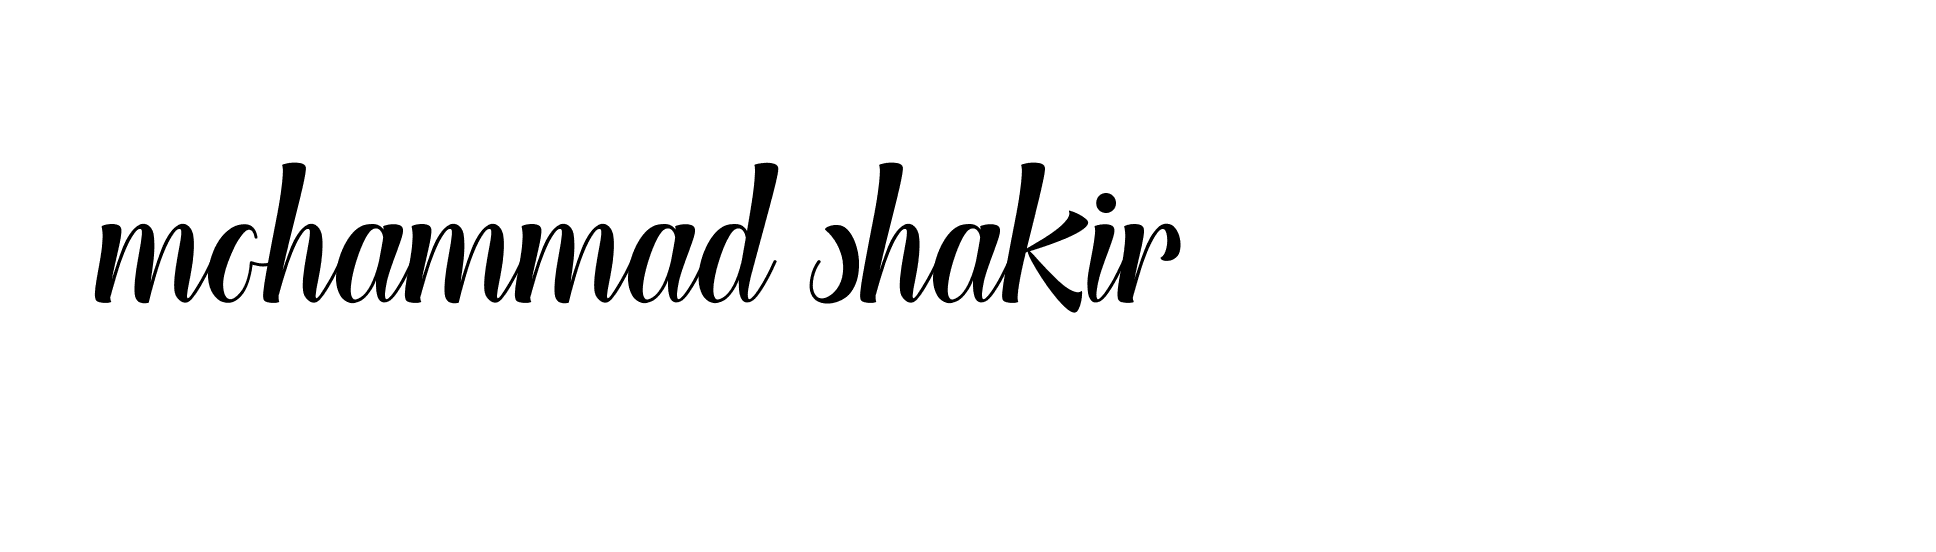 95+ Mohammad-shakir- Name Signature Style Ideas | Ideal Autograph